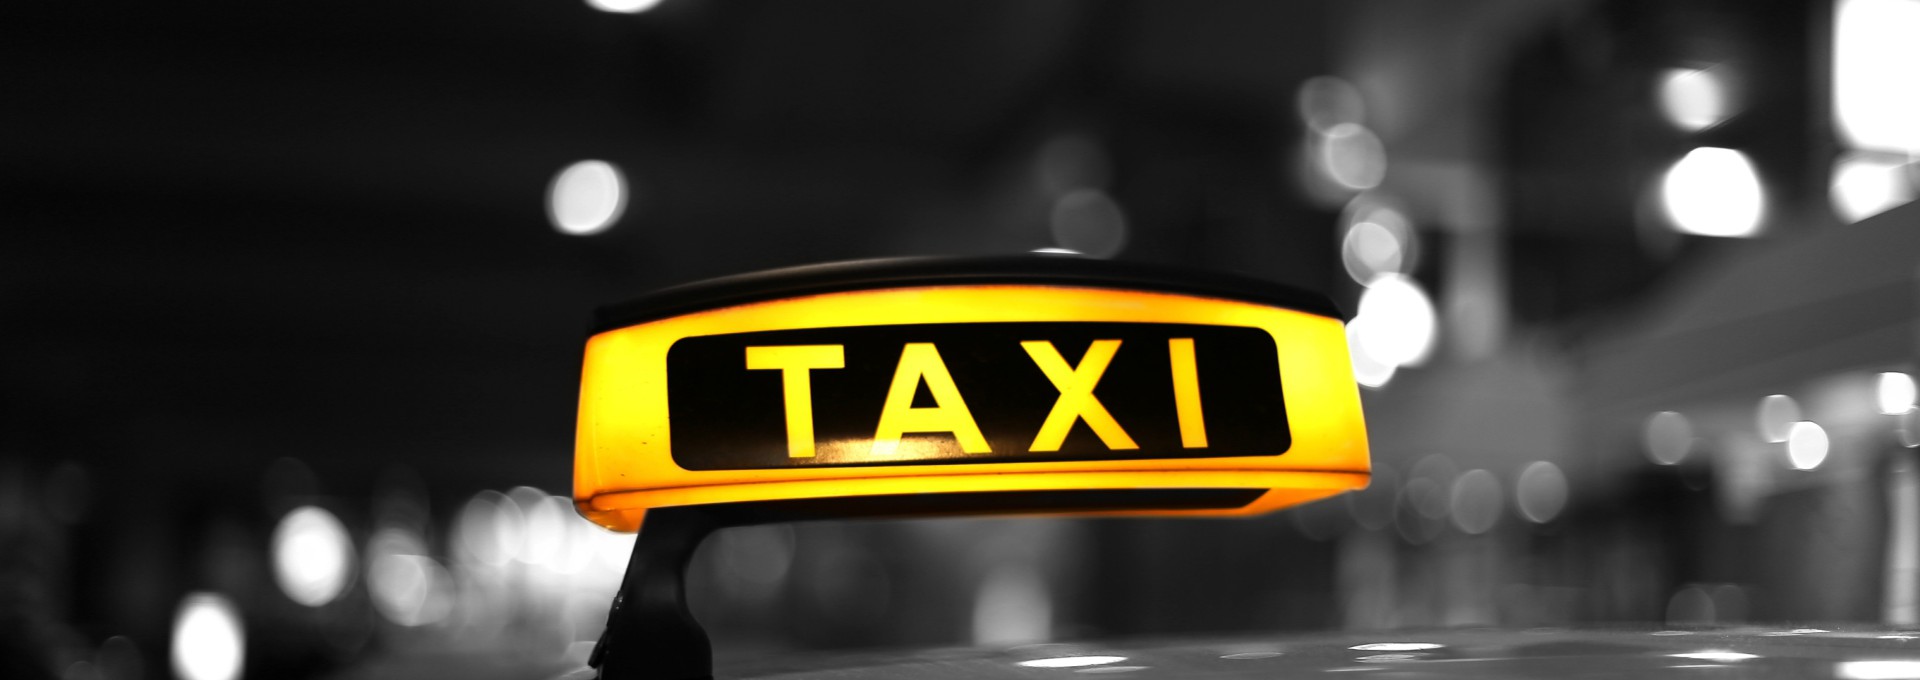 Староминское такси. Такси фон. Такси обложка. Визитка такси. Обложка такси для ВК.